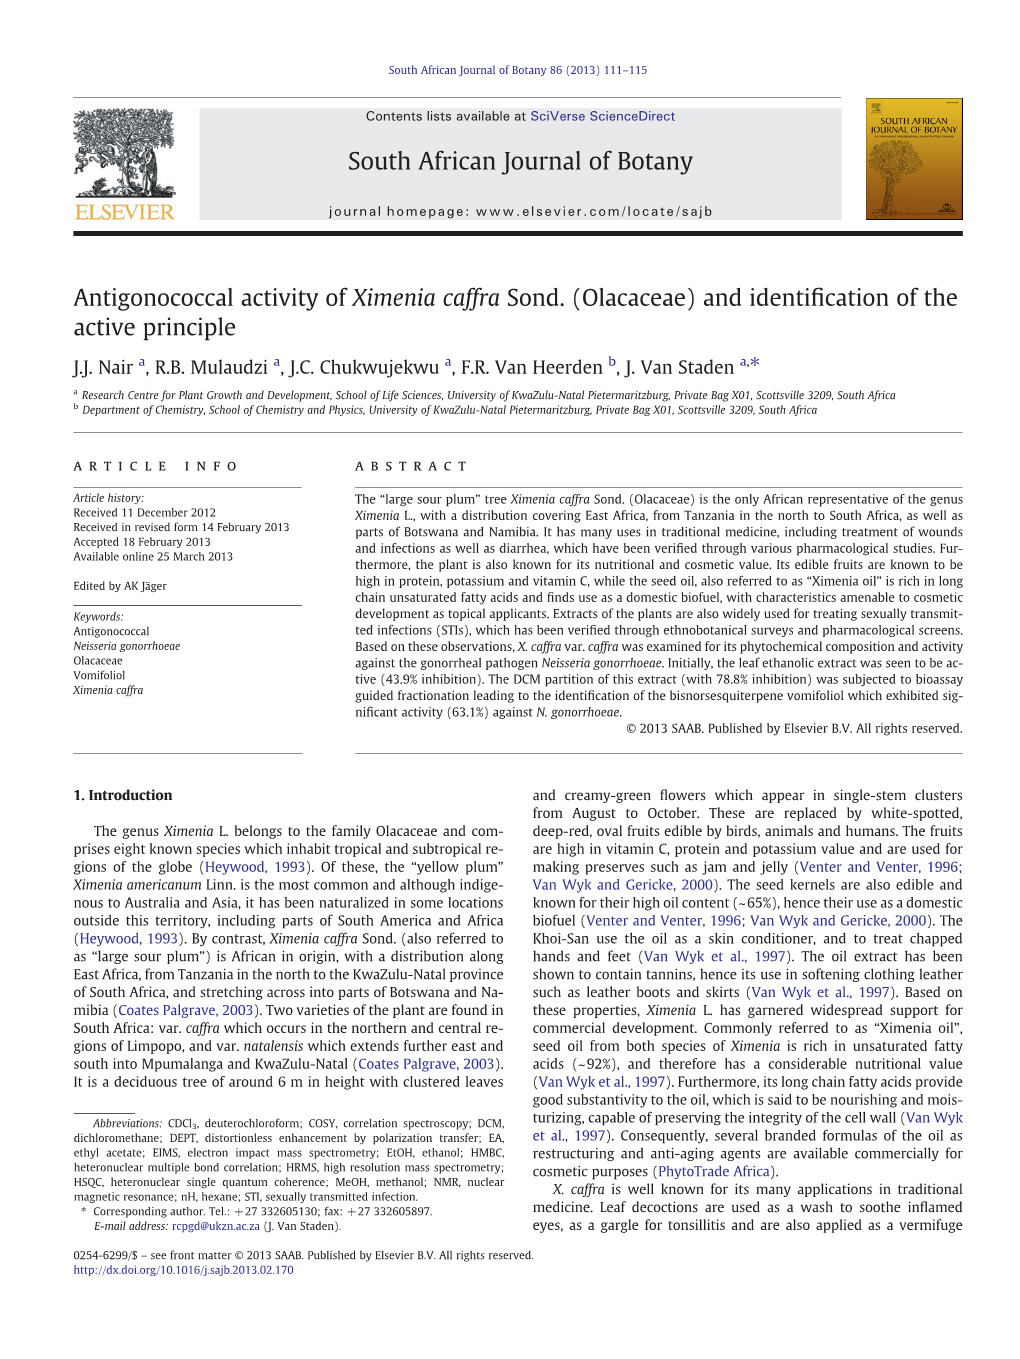 Antigonococcal Activity of Ximenia Caffra Sond. (Olacaceae) and Identiﬁcation of the Active Principle